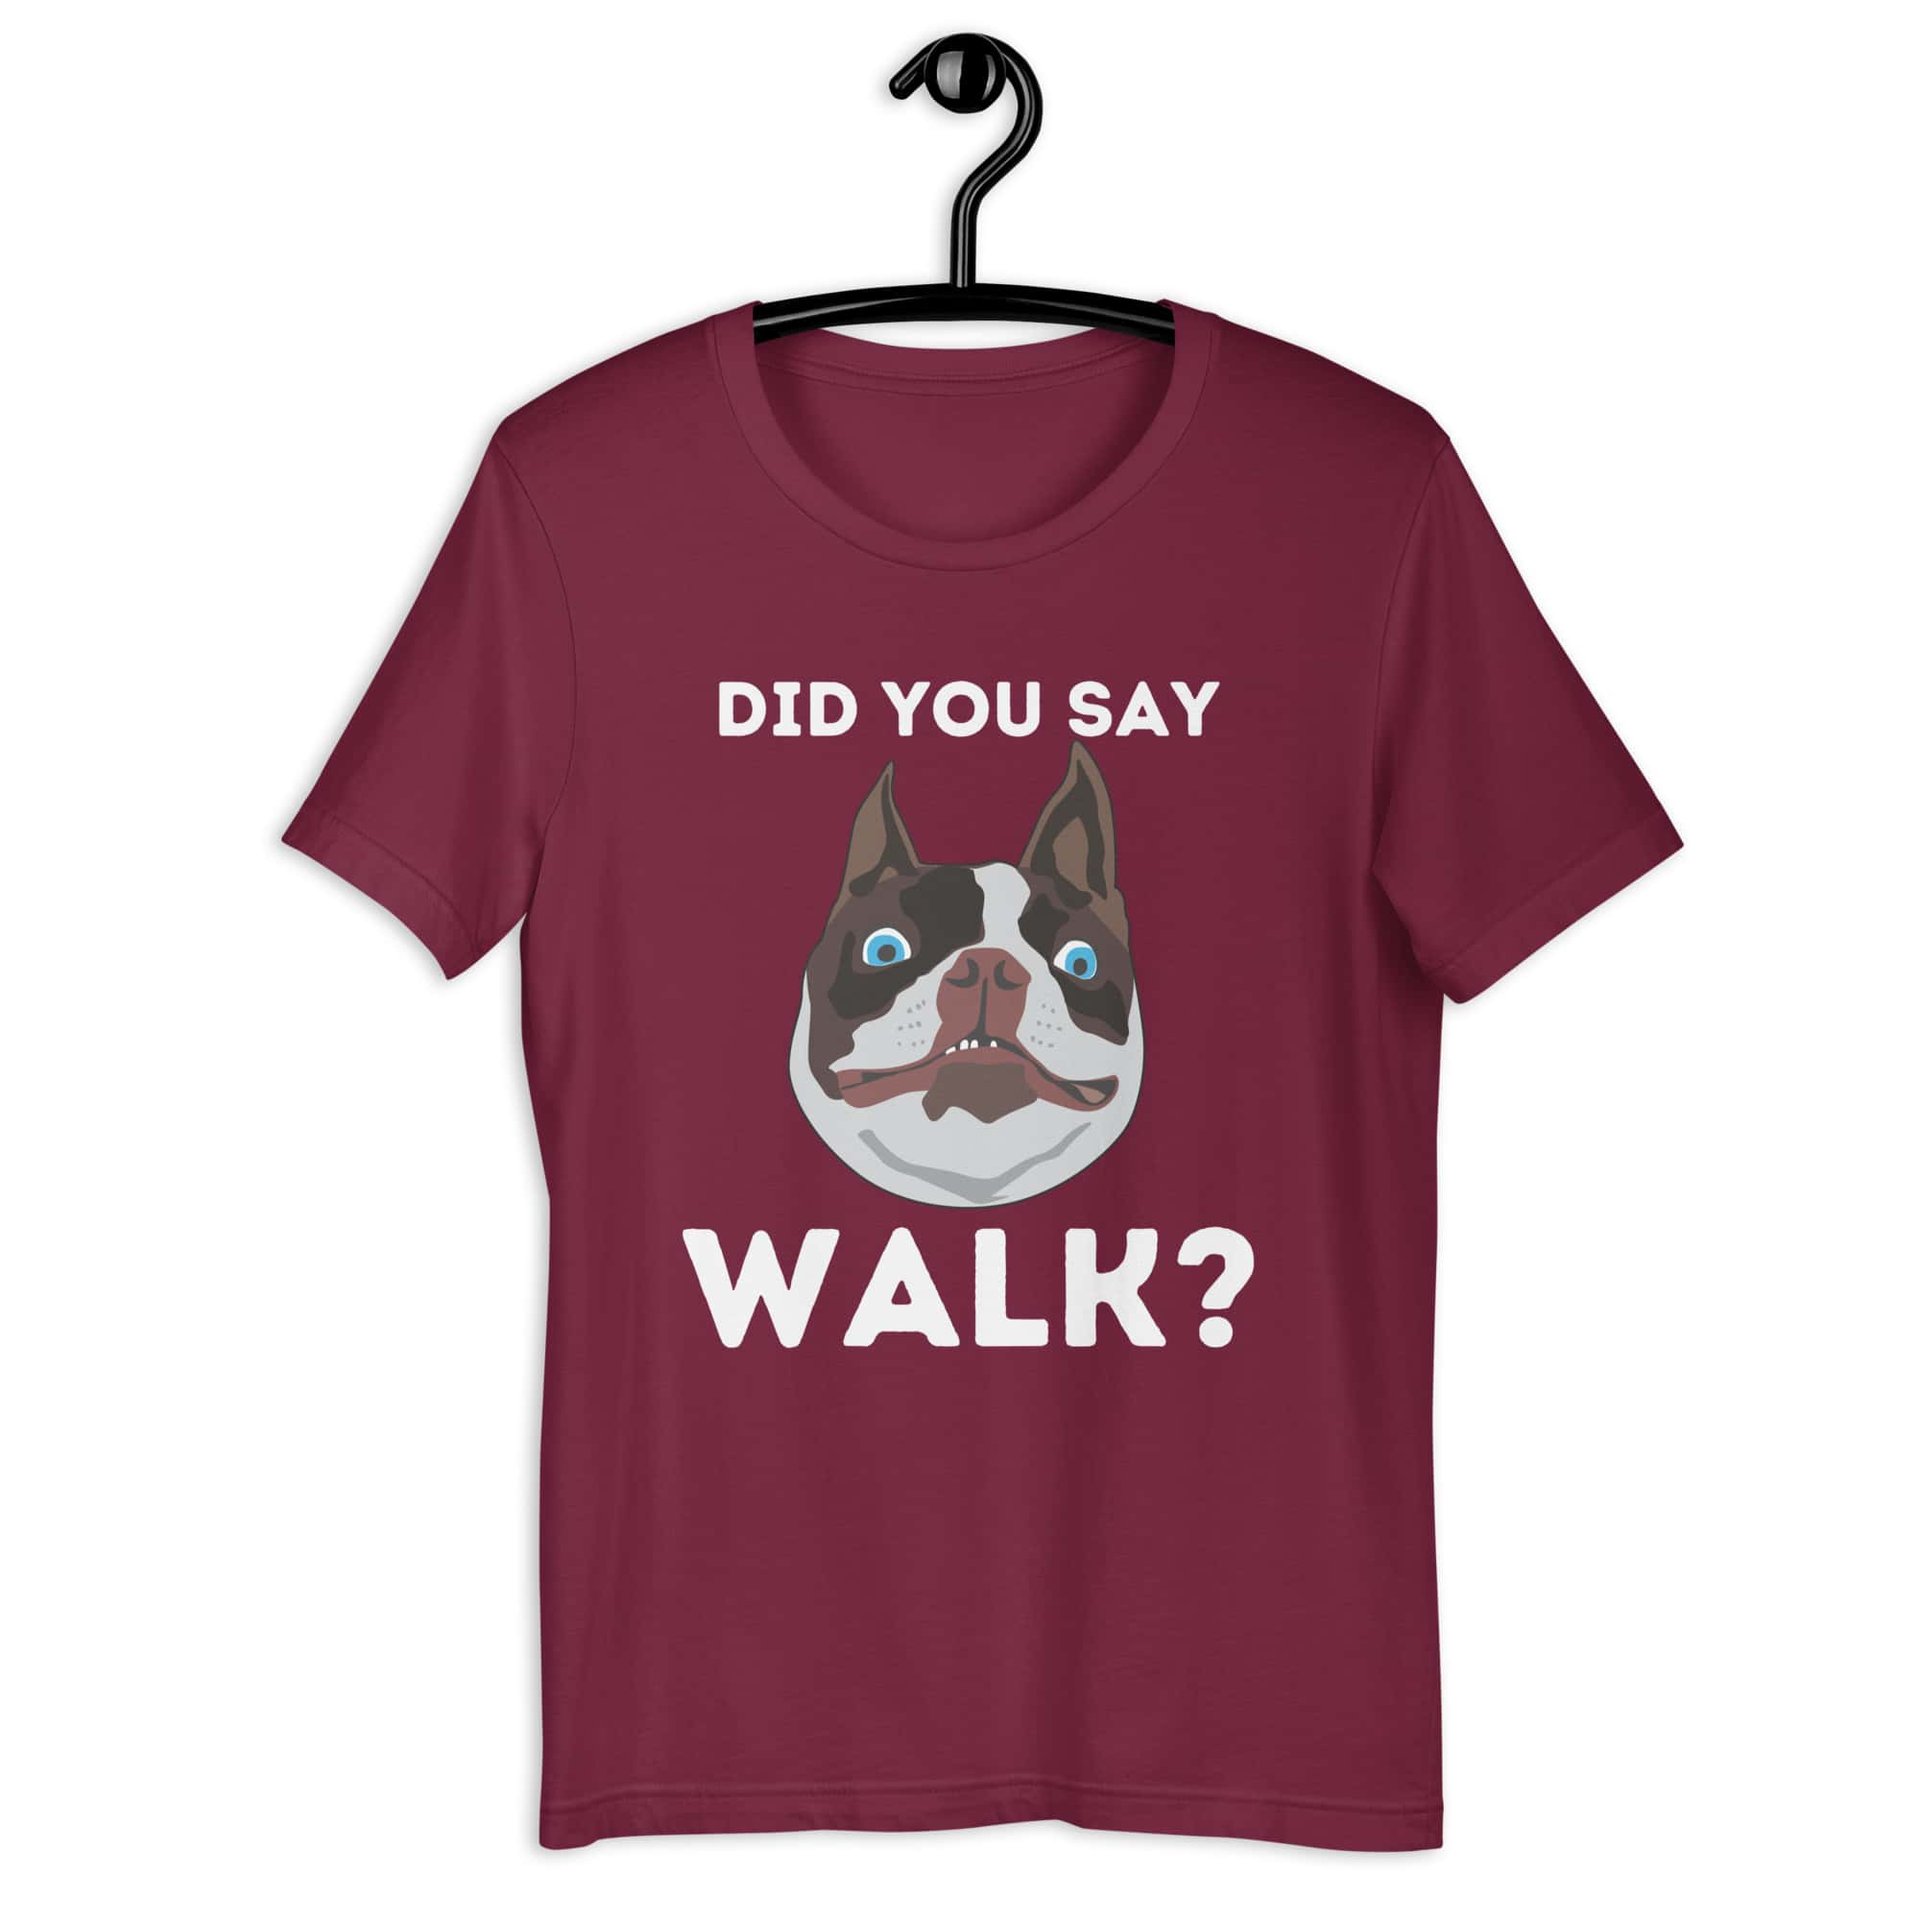 "Did You Say Walk?" Funny Dog Unisex T-Shirt. Maroon